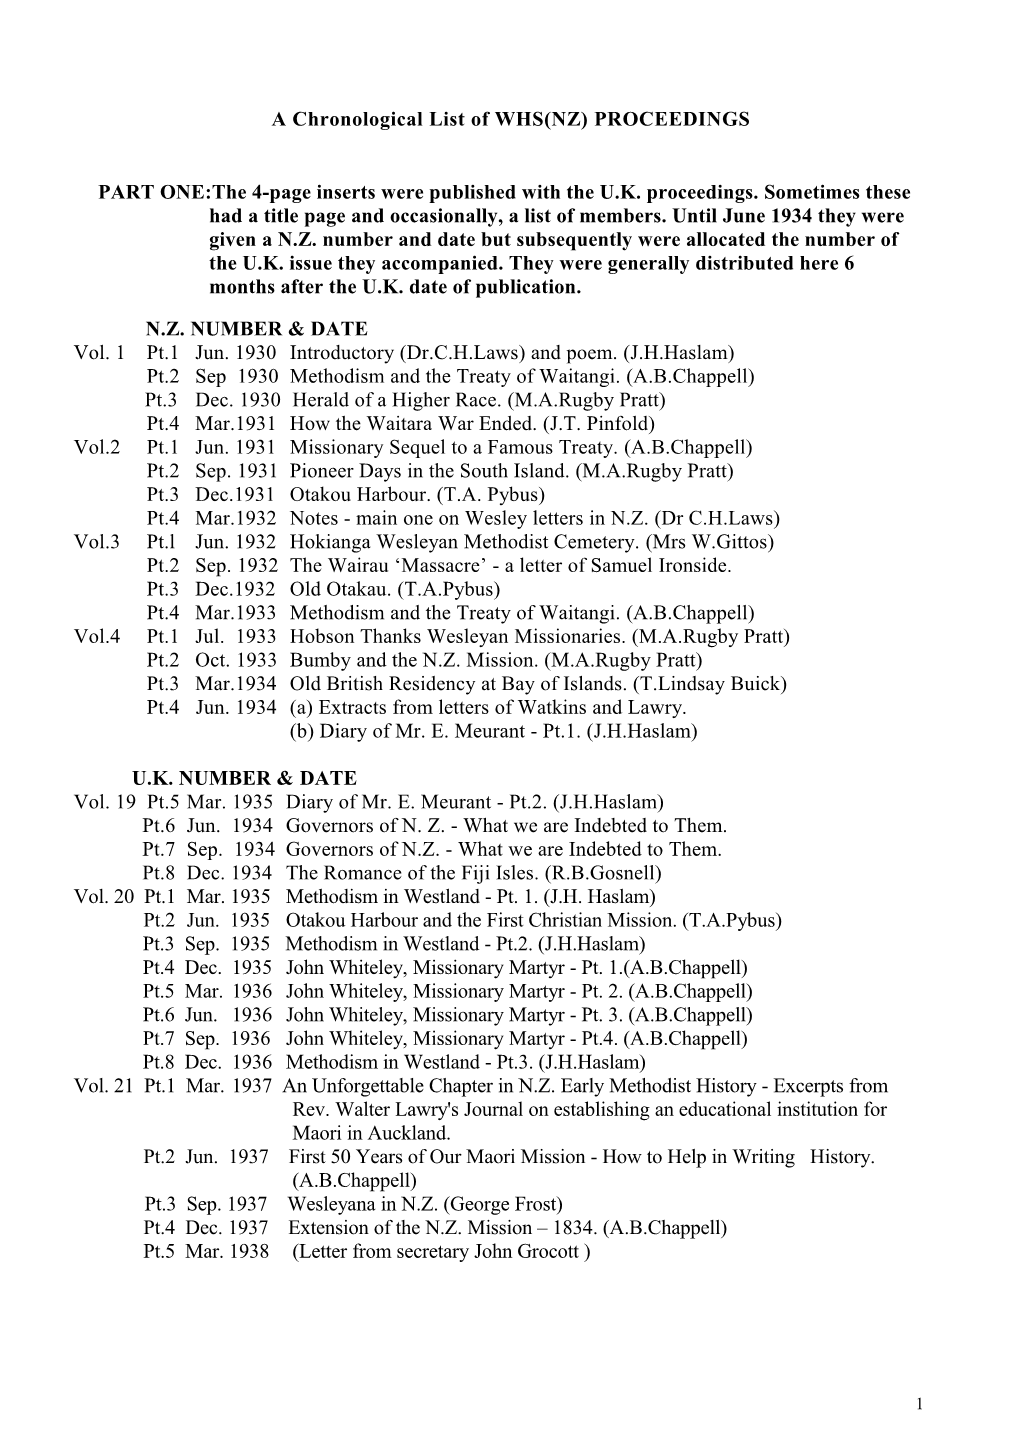 A List of Whs(Nz) Proceedings